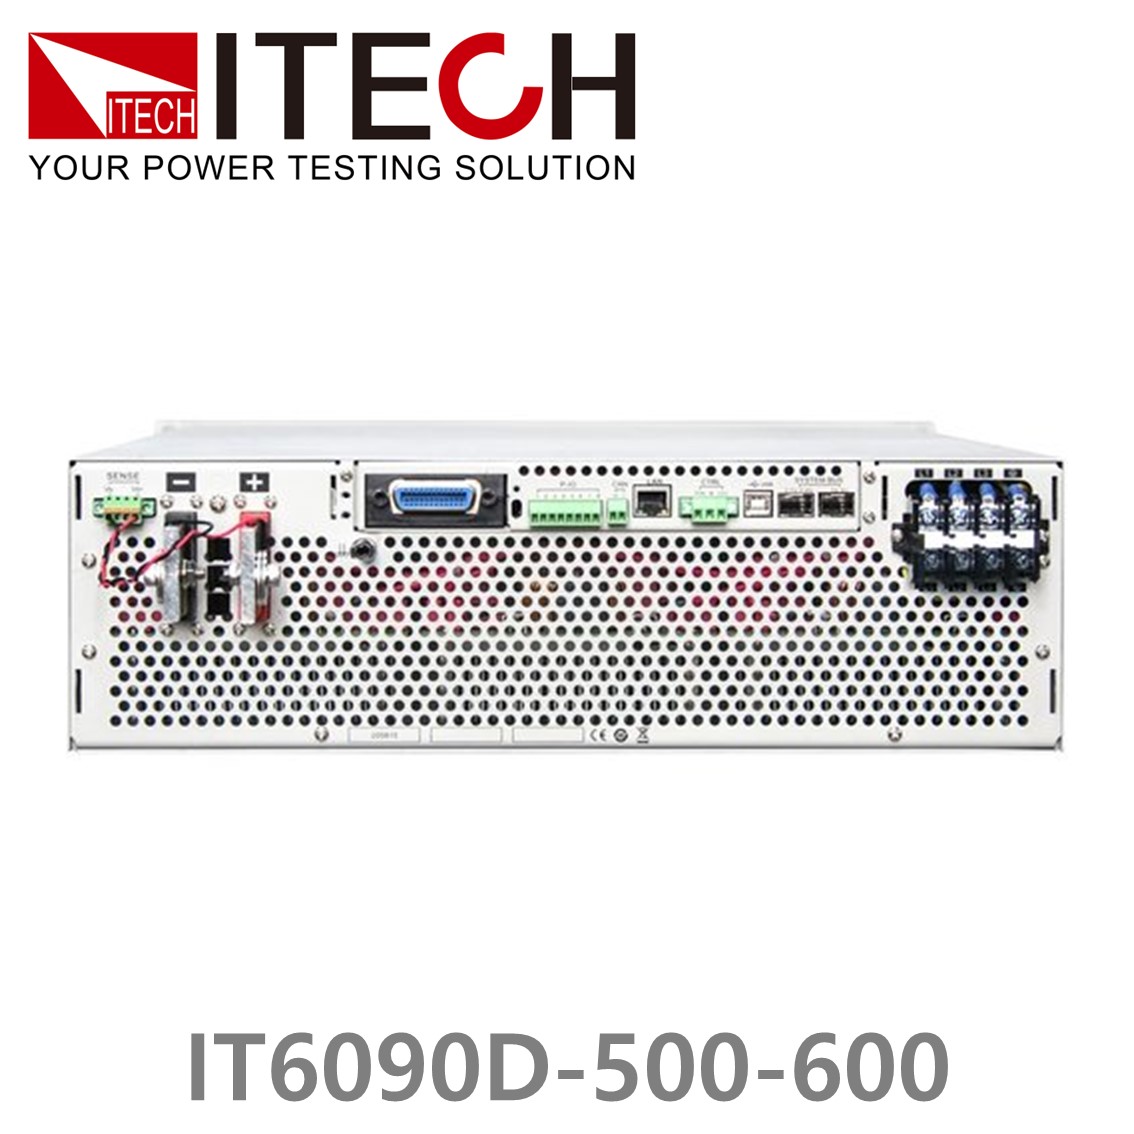 [ ITECH ] IT6090D-500-600 고전력 프로그래머블 DC전원공급기 500V/600A/90kW